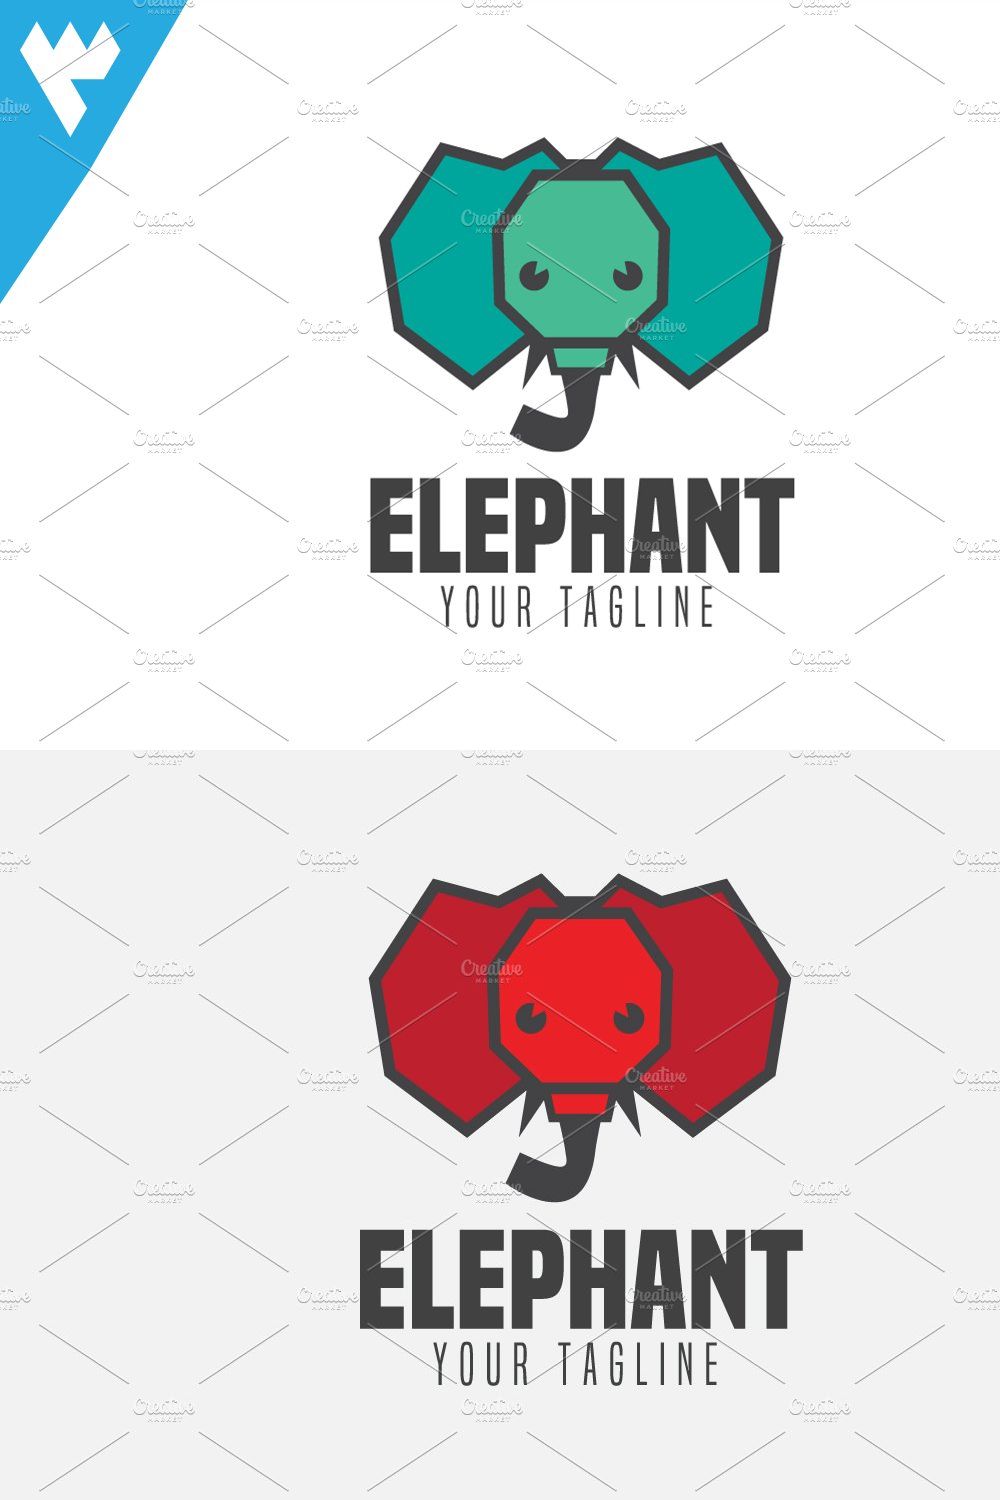 Elephant Paper Craft Logo pinterest preview image.